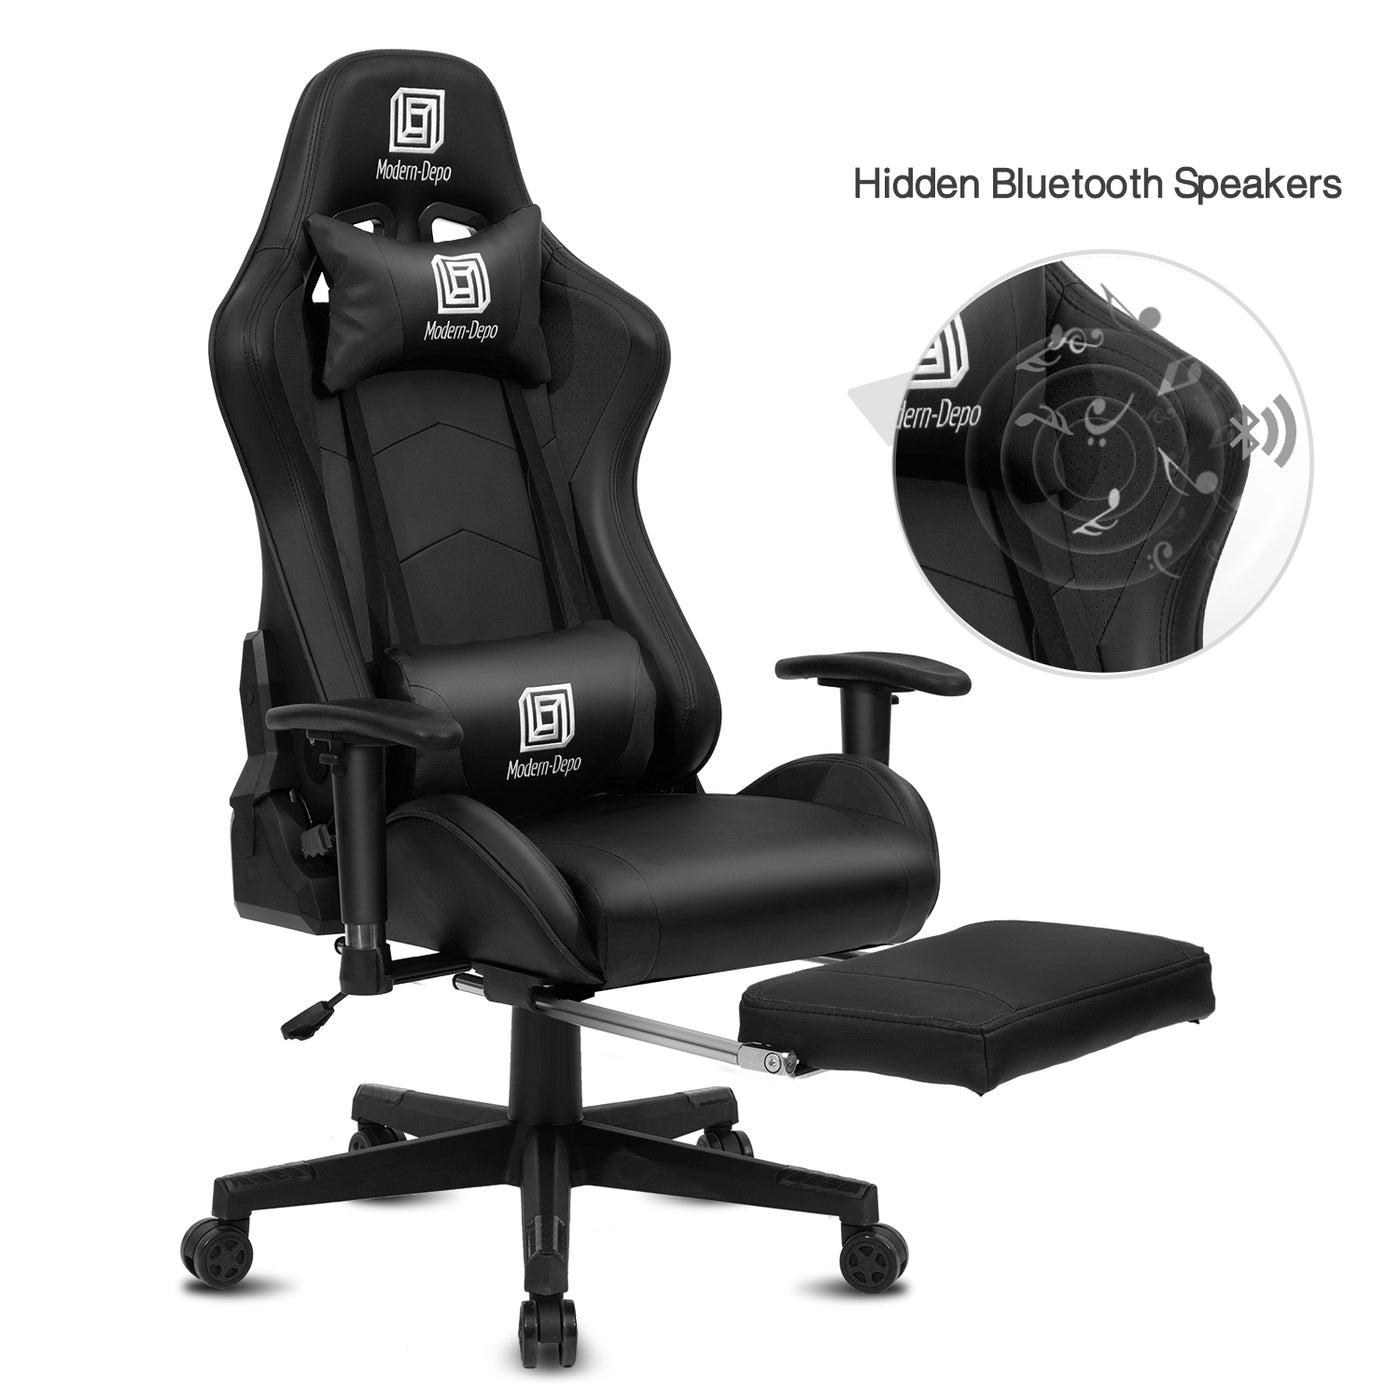 Ergonomic Swivel Racing Gaming Chair with Bluetooth Speaker Headrest Footrest